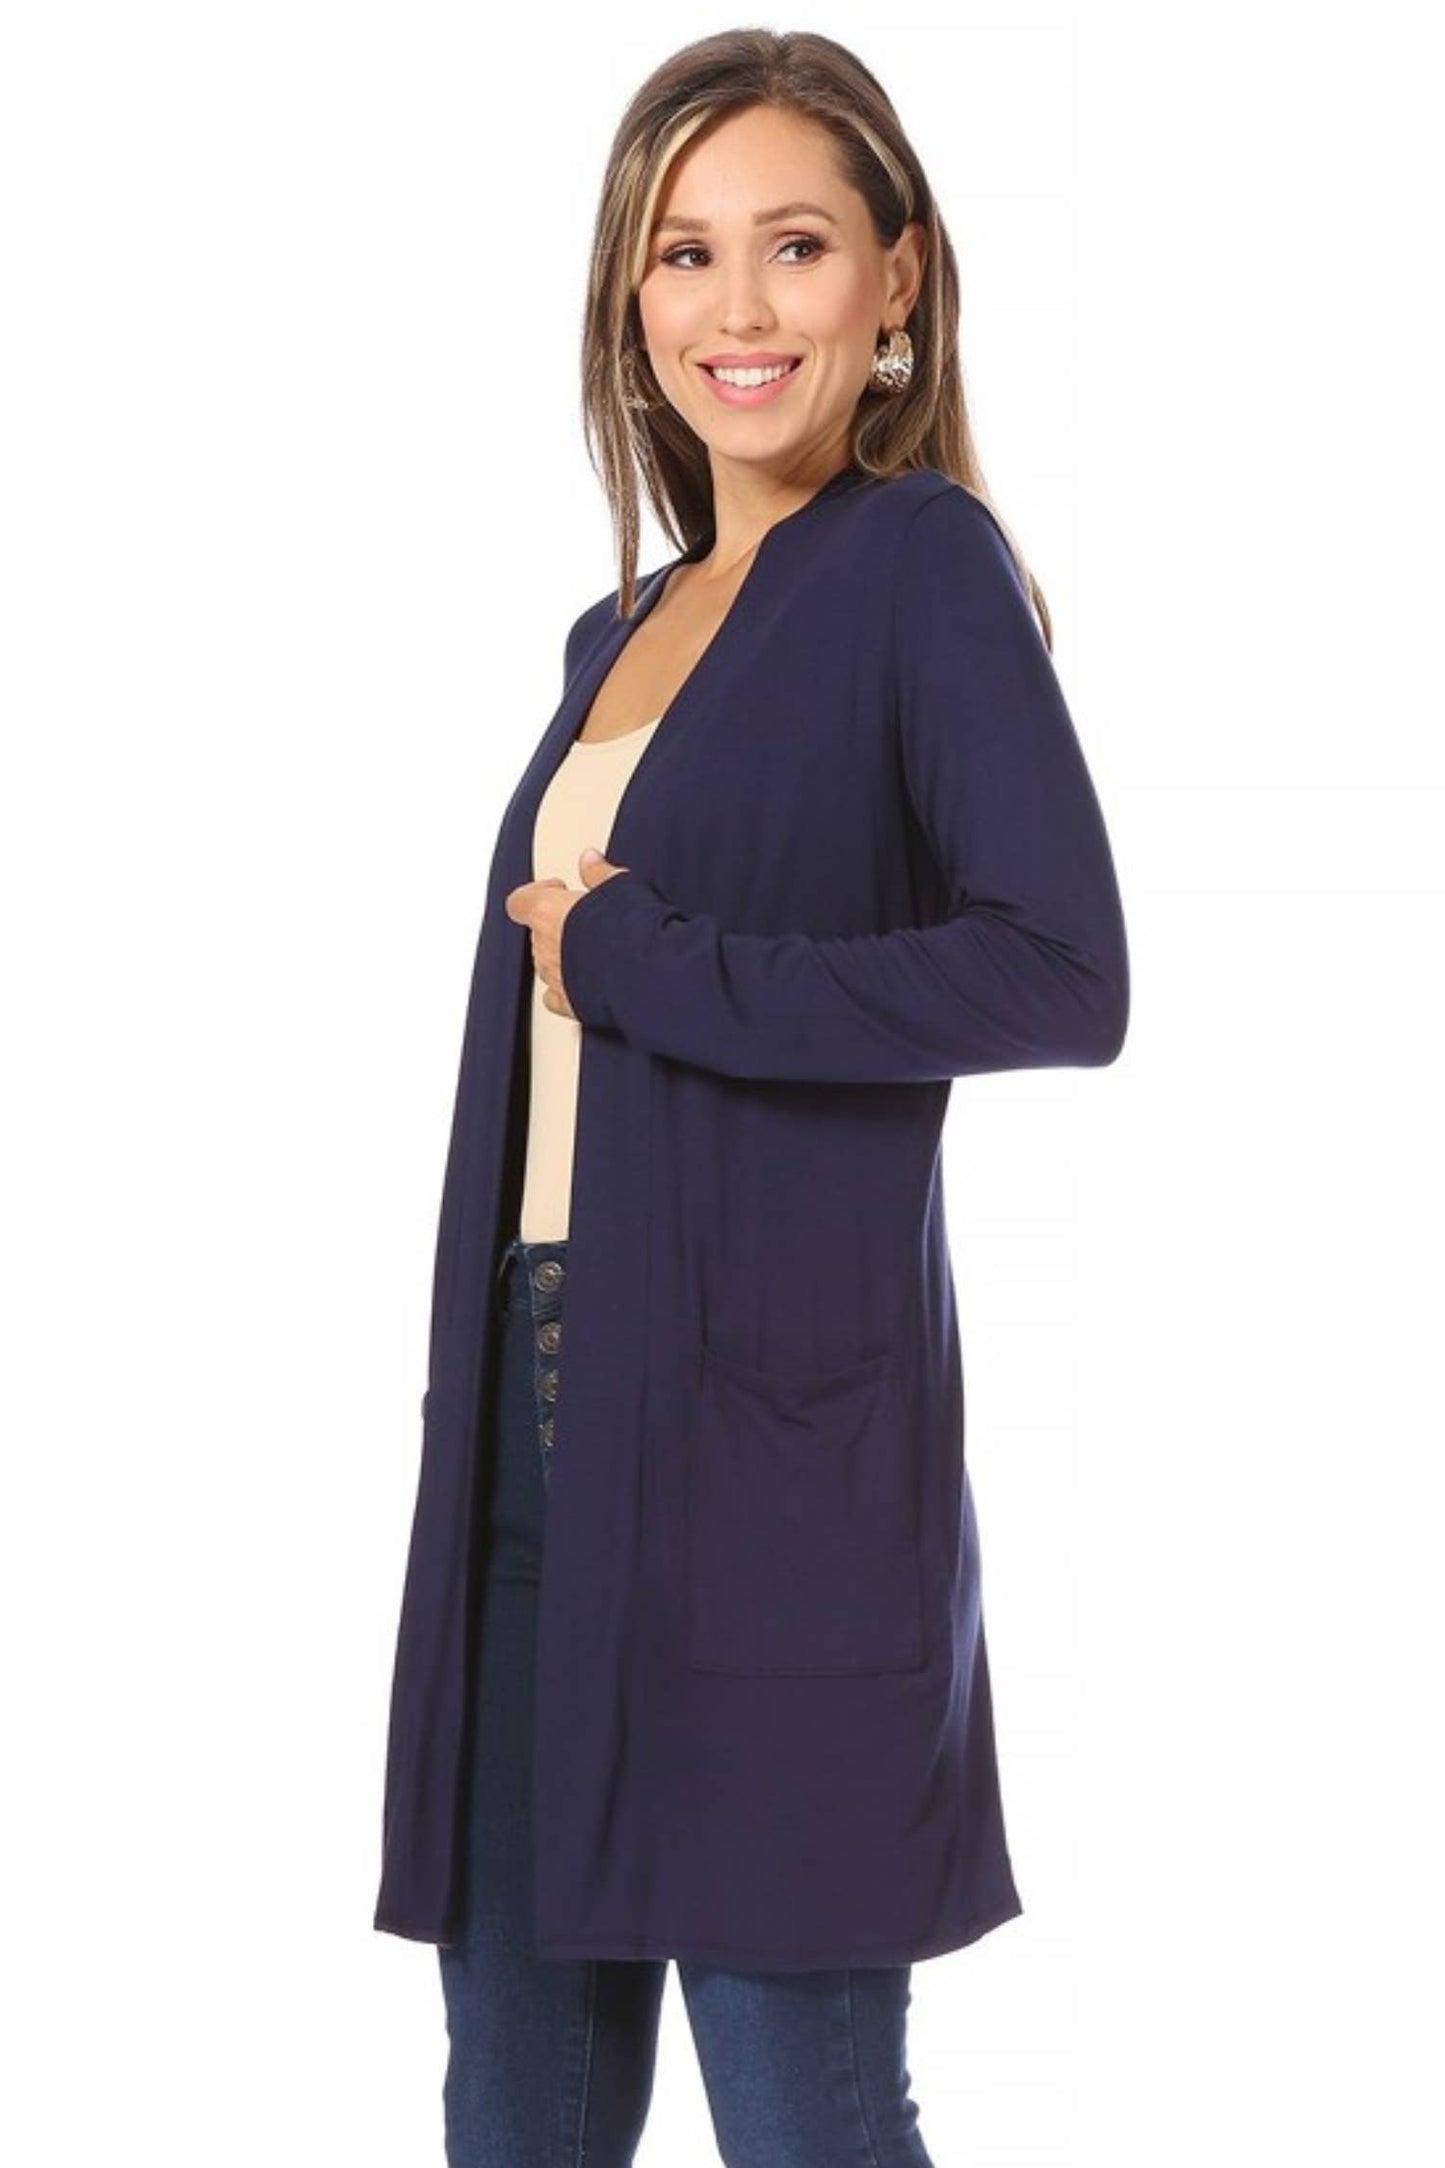 Women's Long Sleeves Side Pockets Solid Cardigan (Open Pack): Medium / Plum